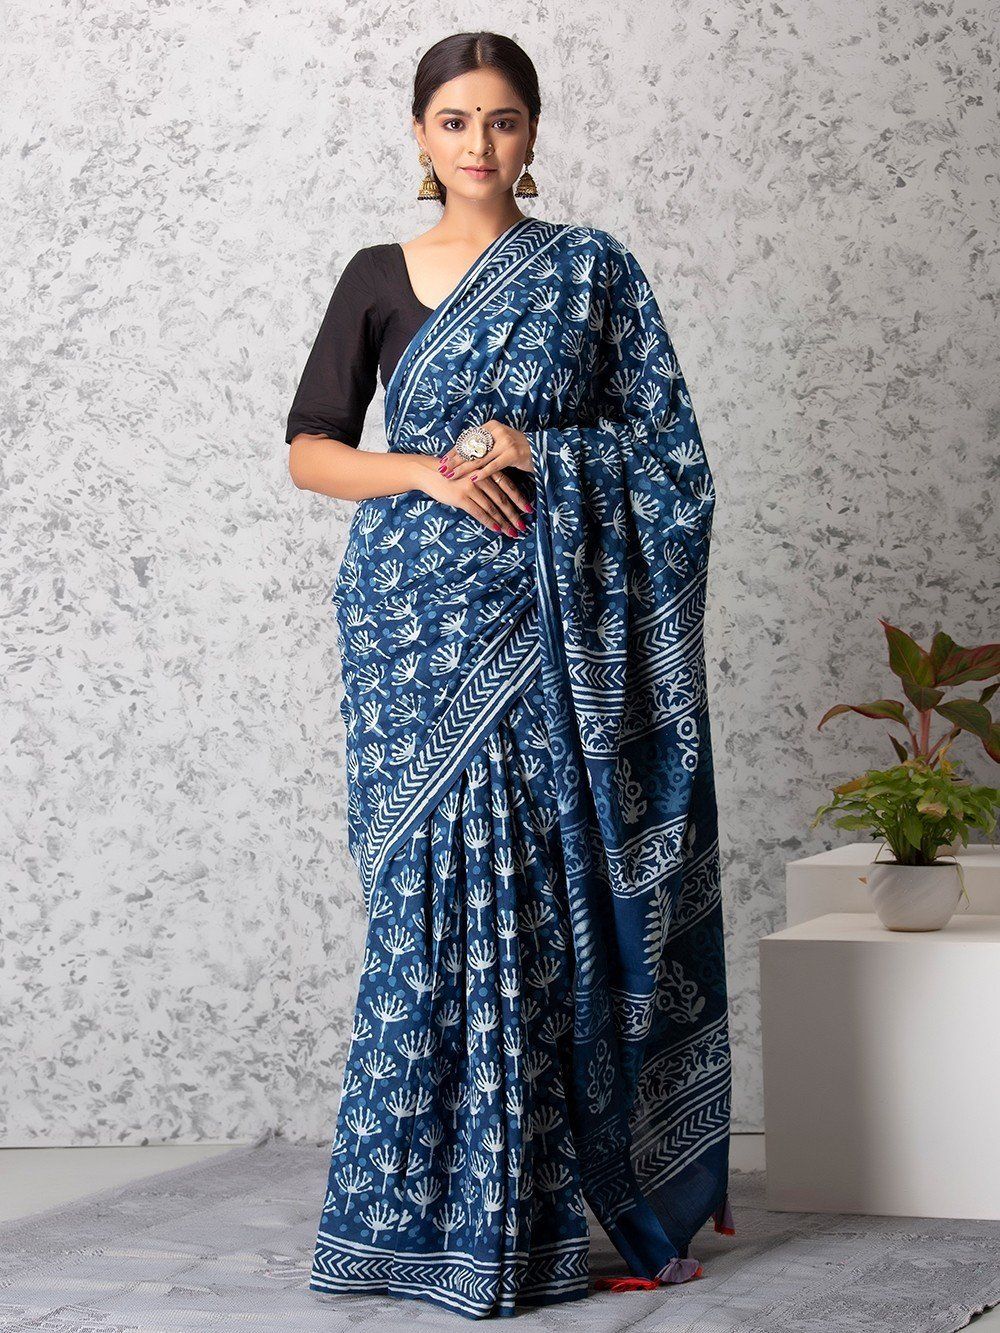 Share 80+ indigo cotton sarees online super hot